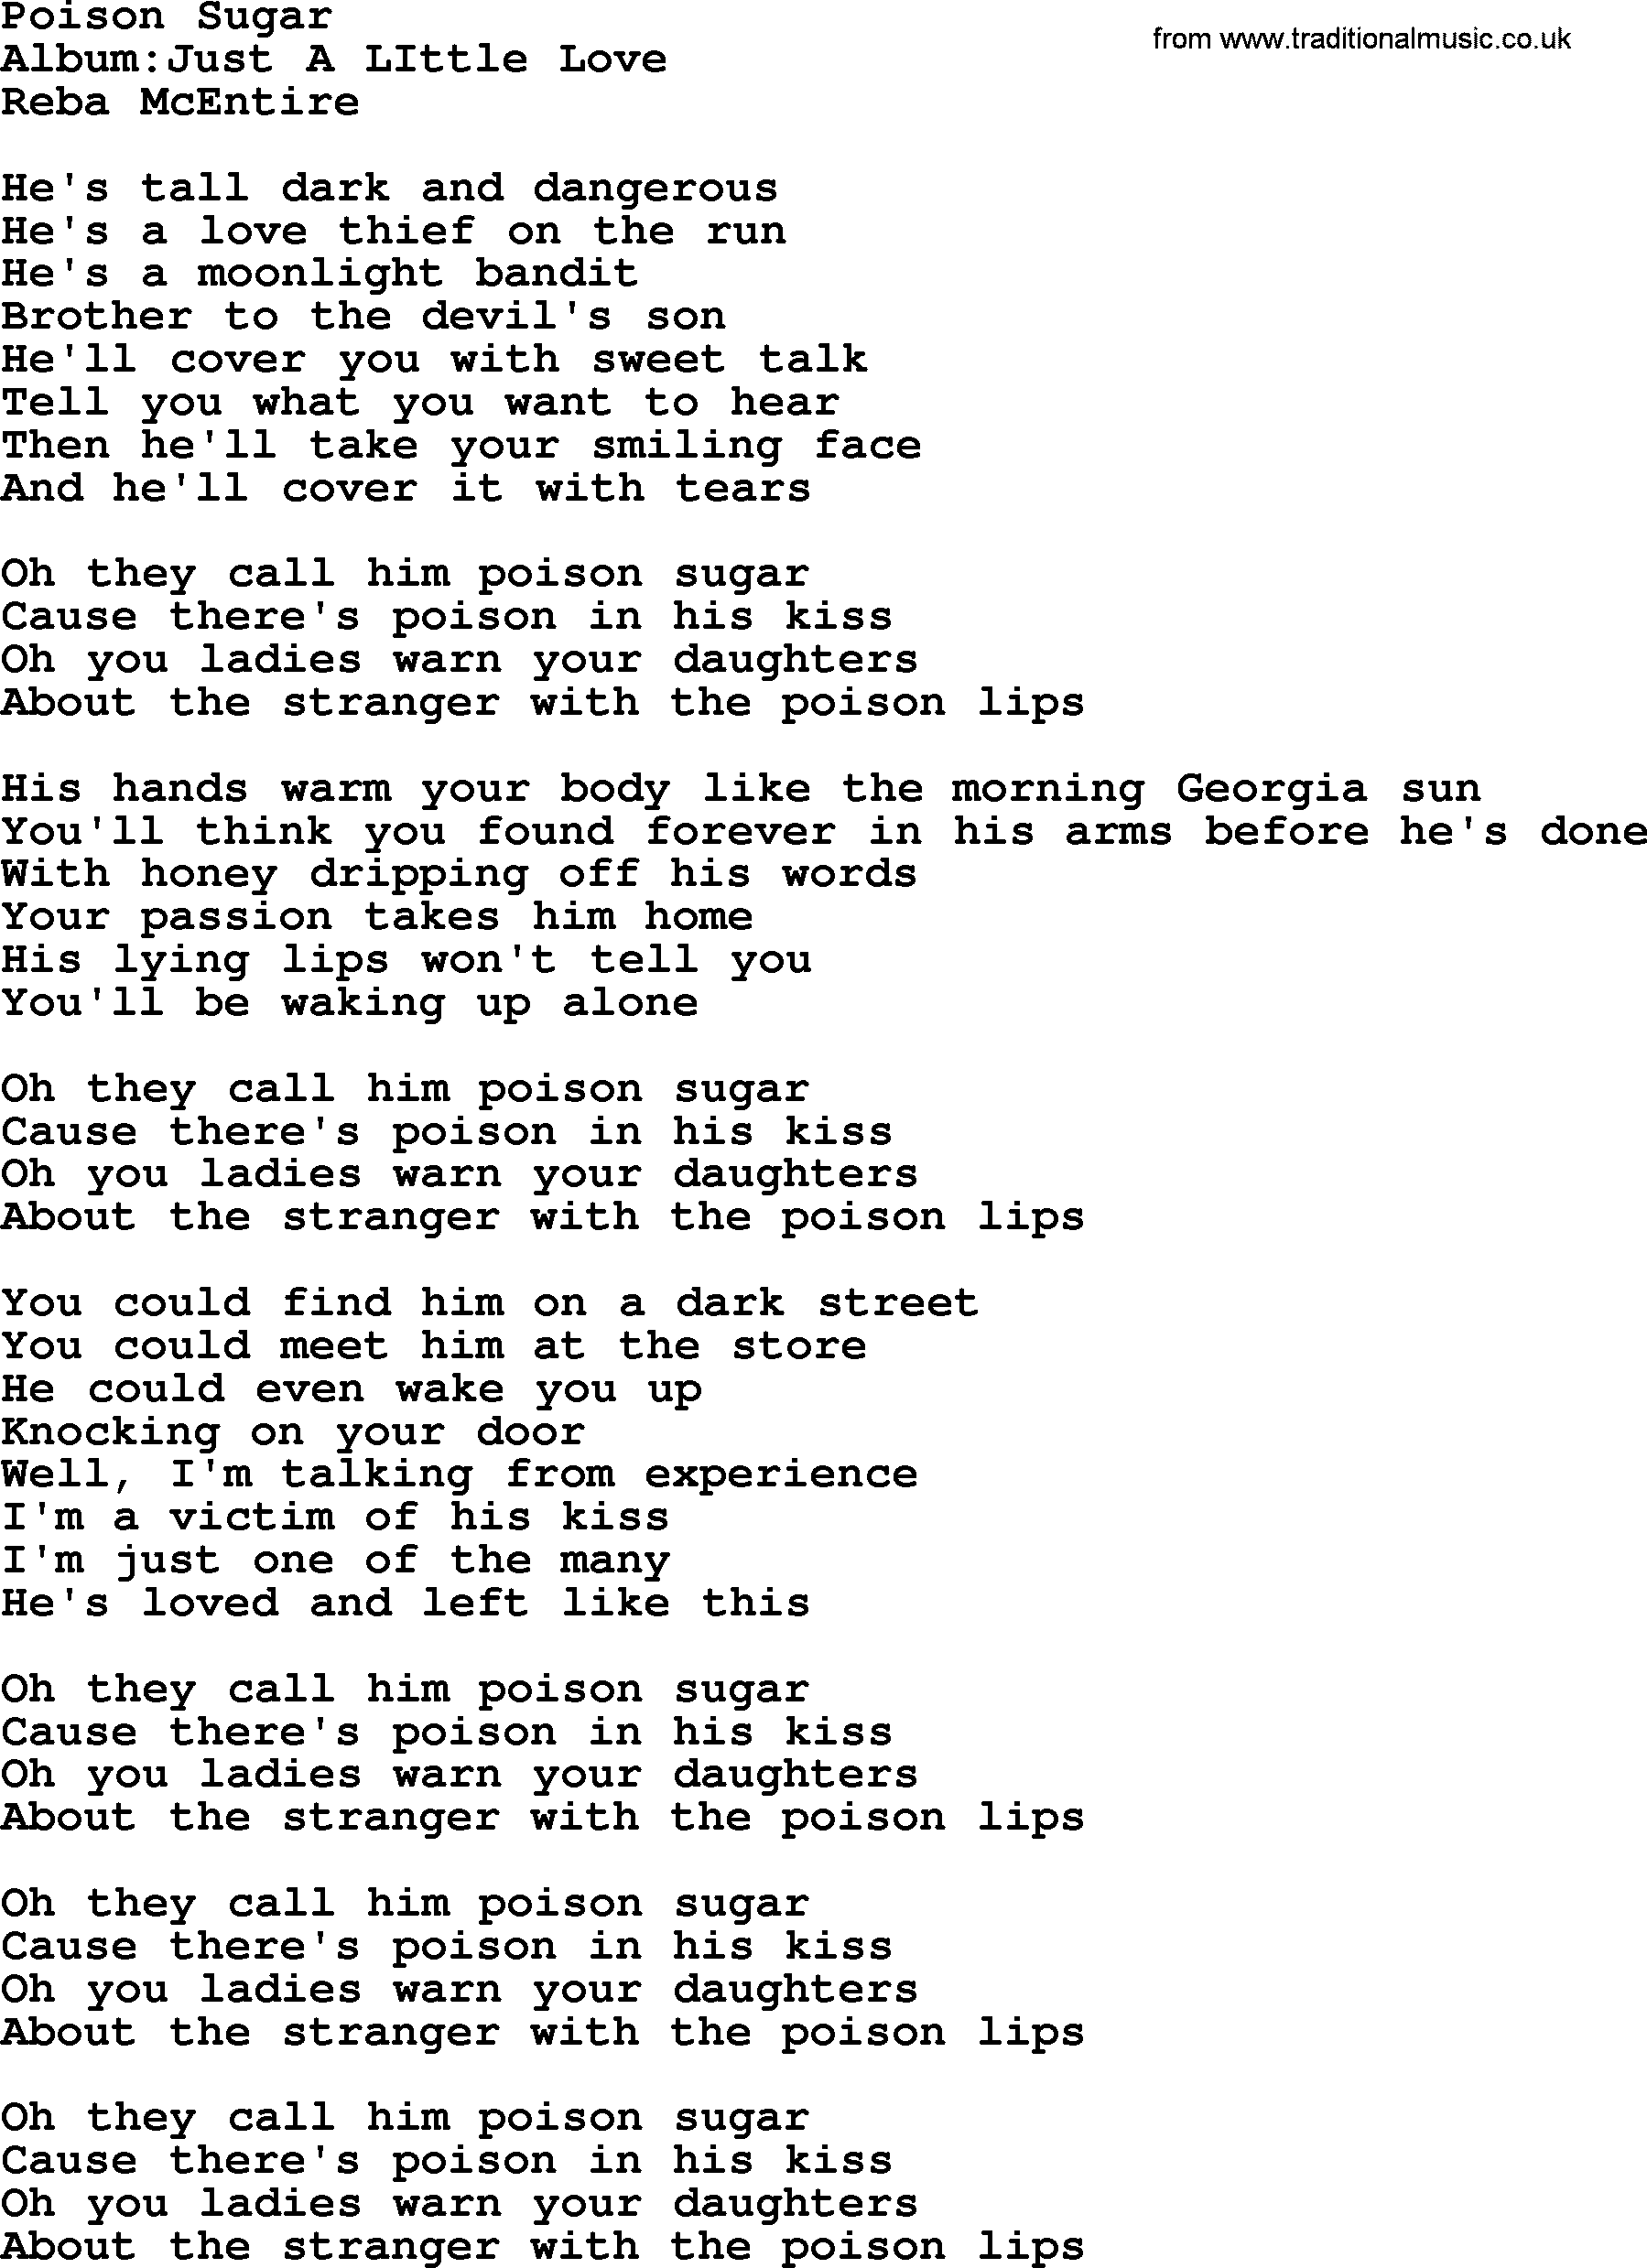 Reba McEntire song: Poison Sugar lyrics